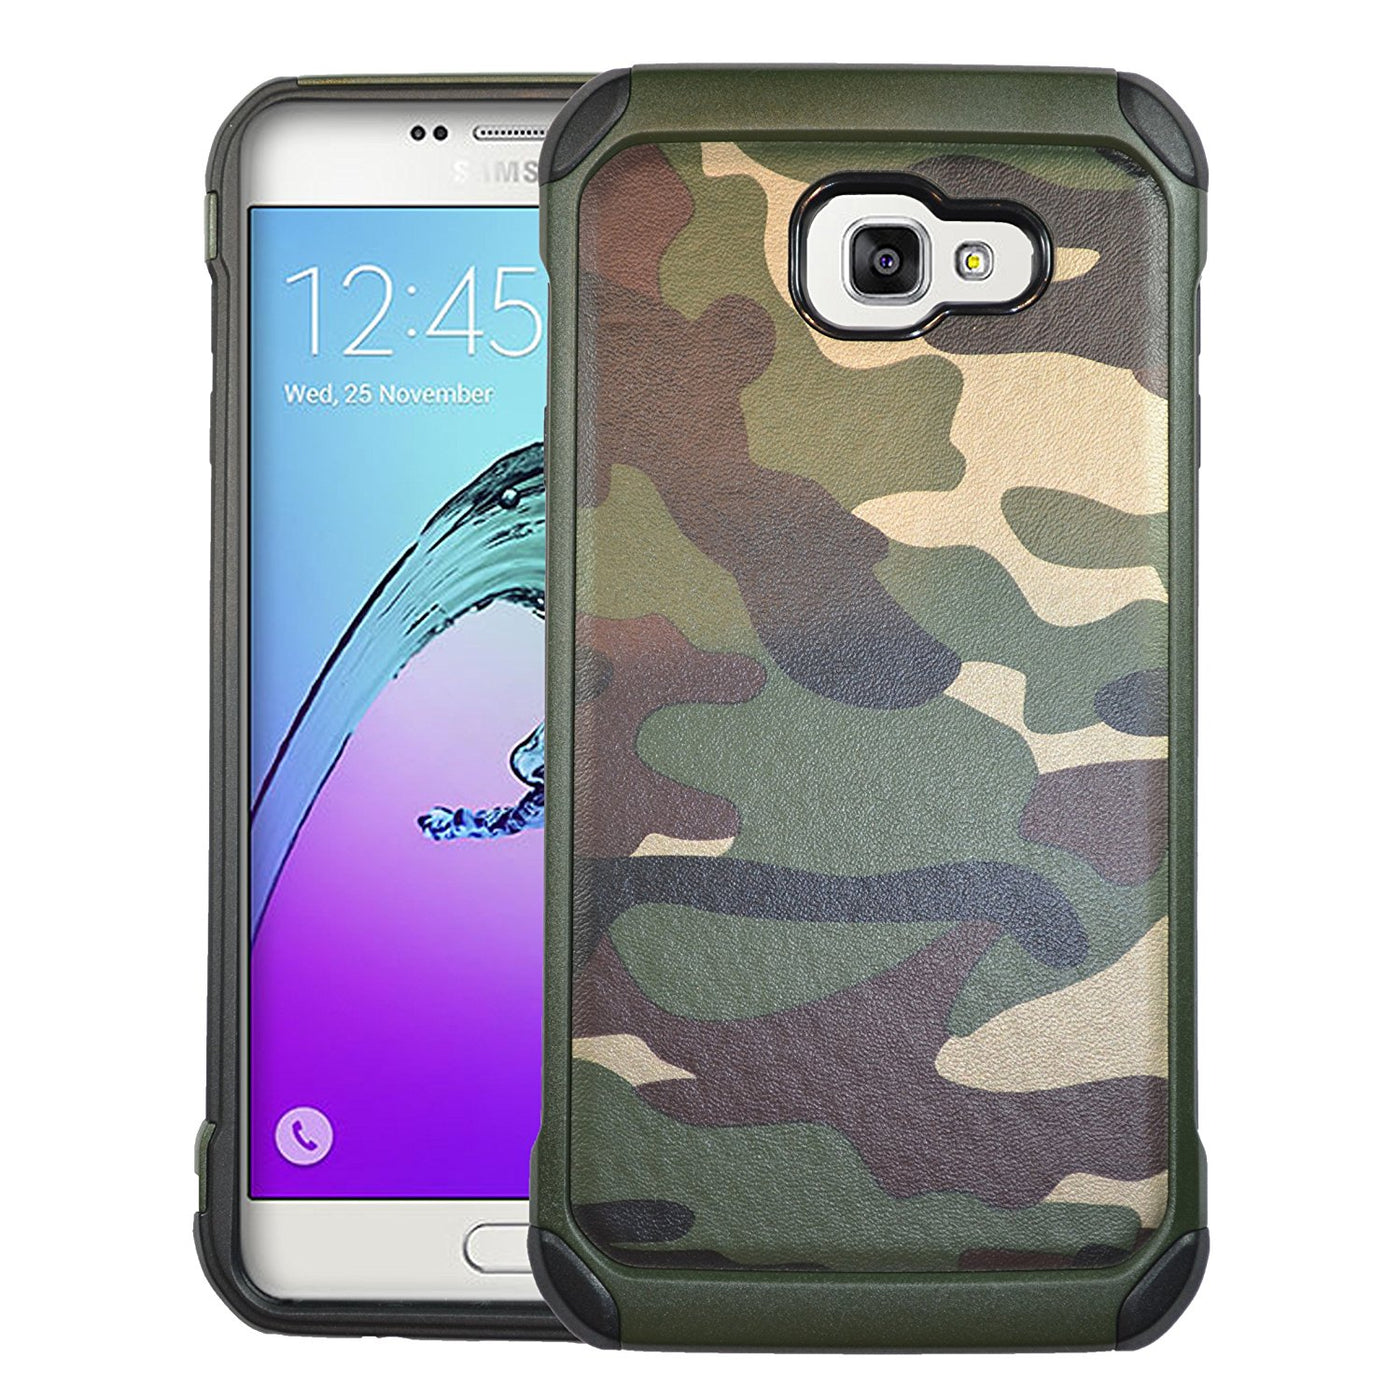 Samsung Galaxy A7 2017 military design back cover